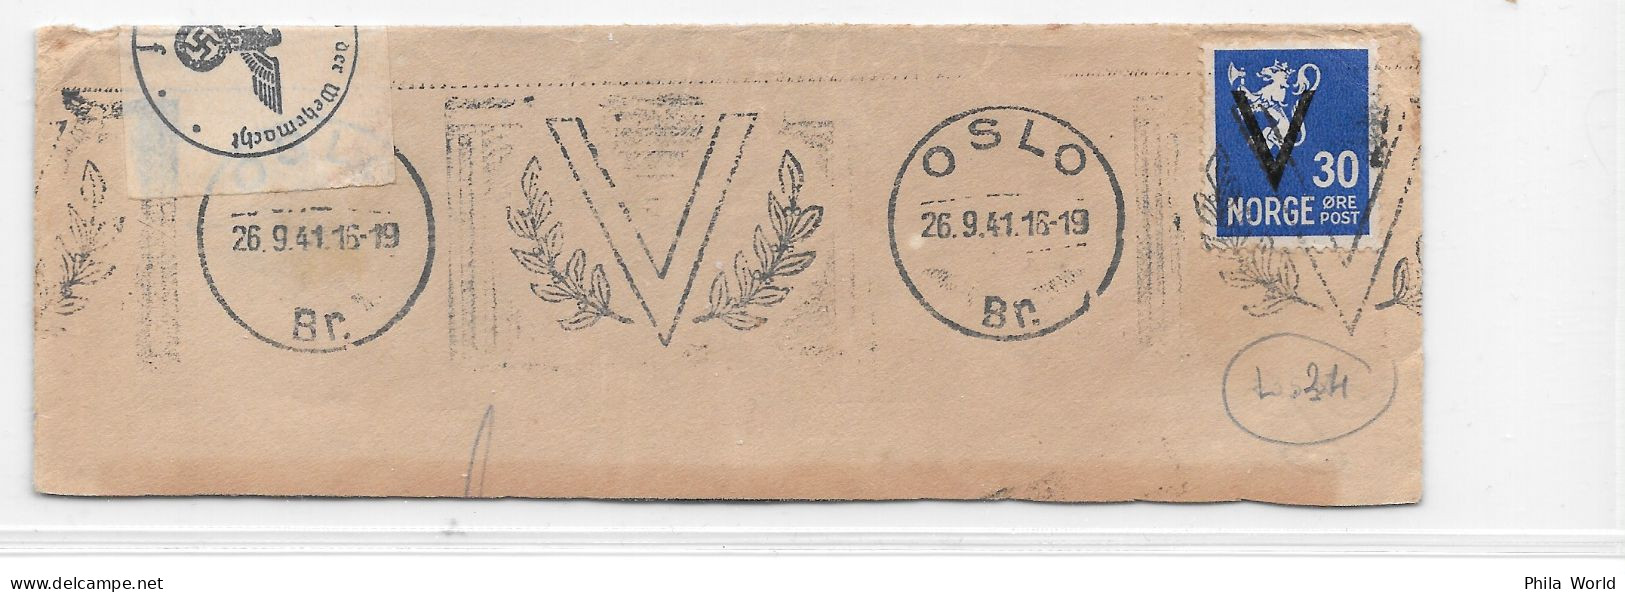 WW2 NORGE NORVEGE NORWAY 1941 Fragment Devant Lettre Oslo V Overprint Surcharge 30 C LION + Cancel Germany Censorship - Storia Postale